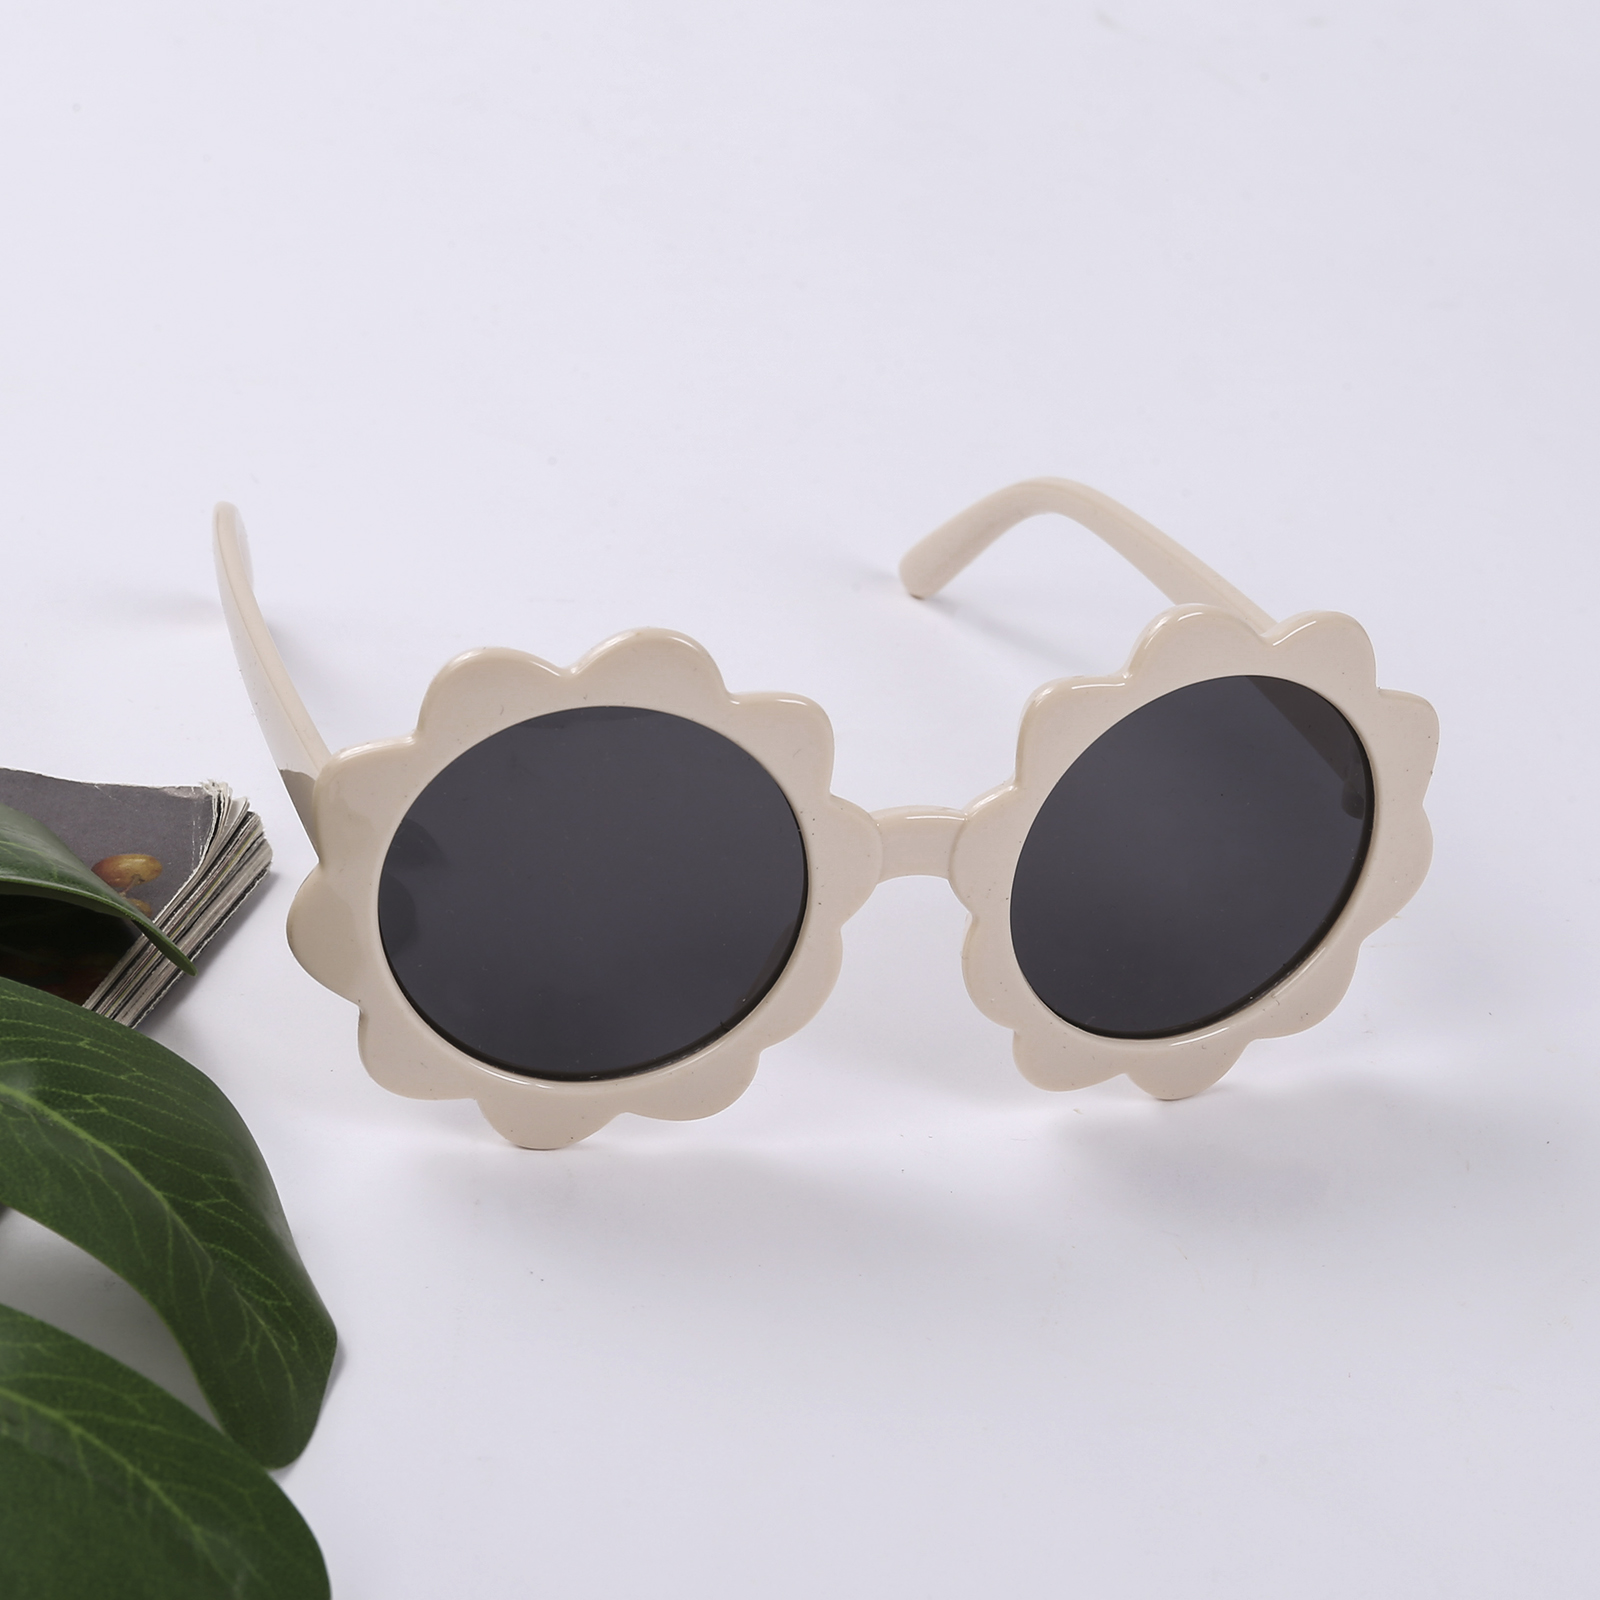 Binpure Kids Beach Sunglasses, Round Flower Shape UV400 Protection Sunglasses - image 4 of 7